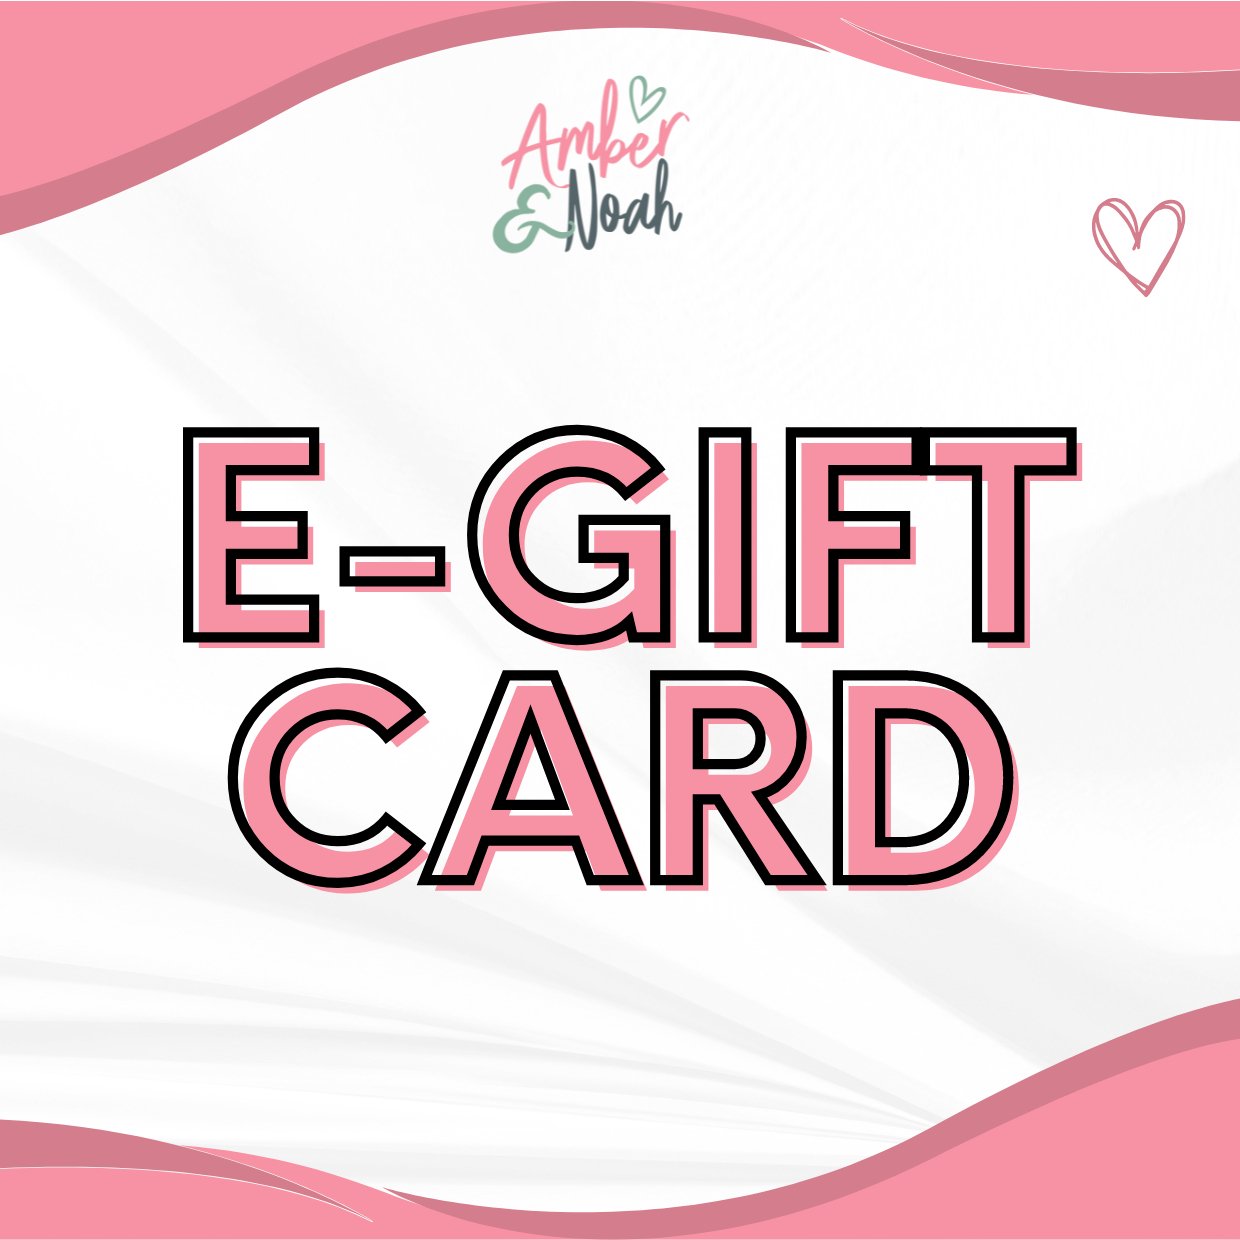 E-Gift Card - Amber and Noah